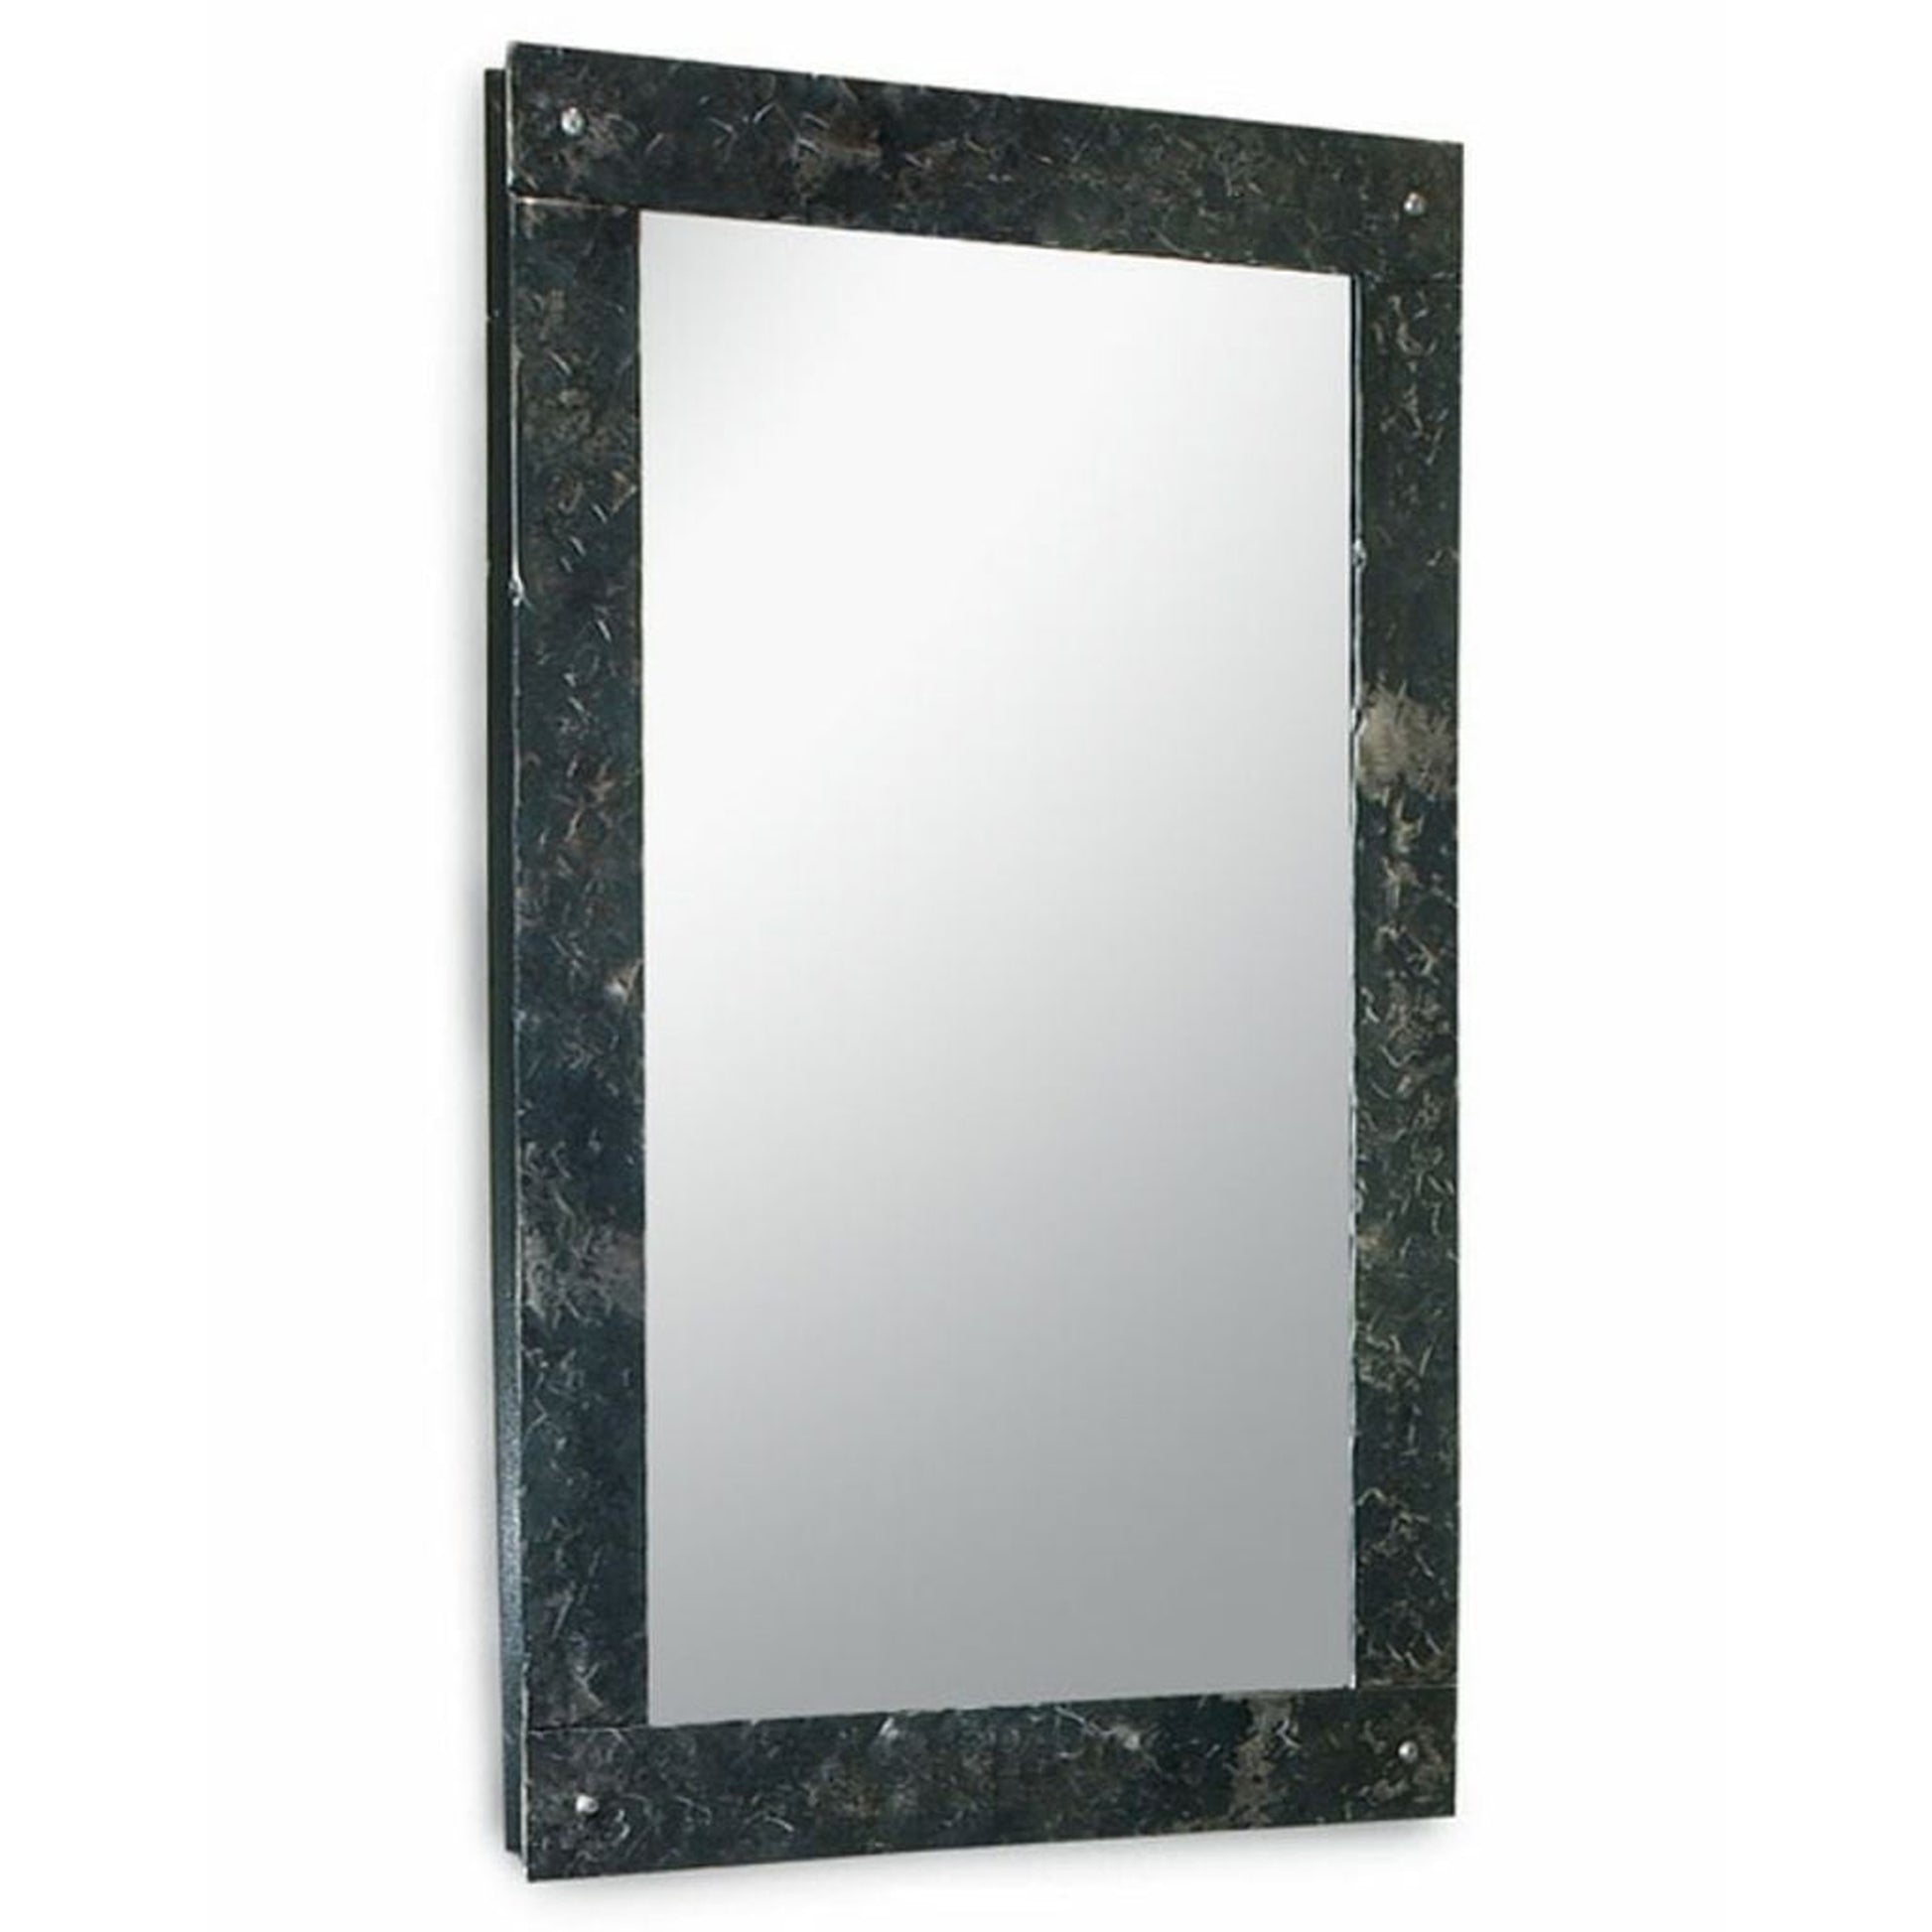 Stone County Ironworks Studio Series 23" x 29" Natural Black Finish Rectangular Mirror